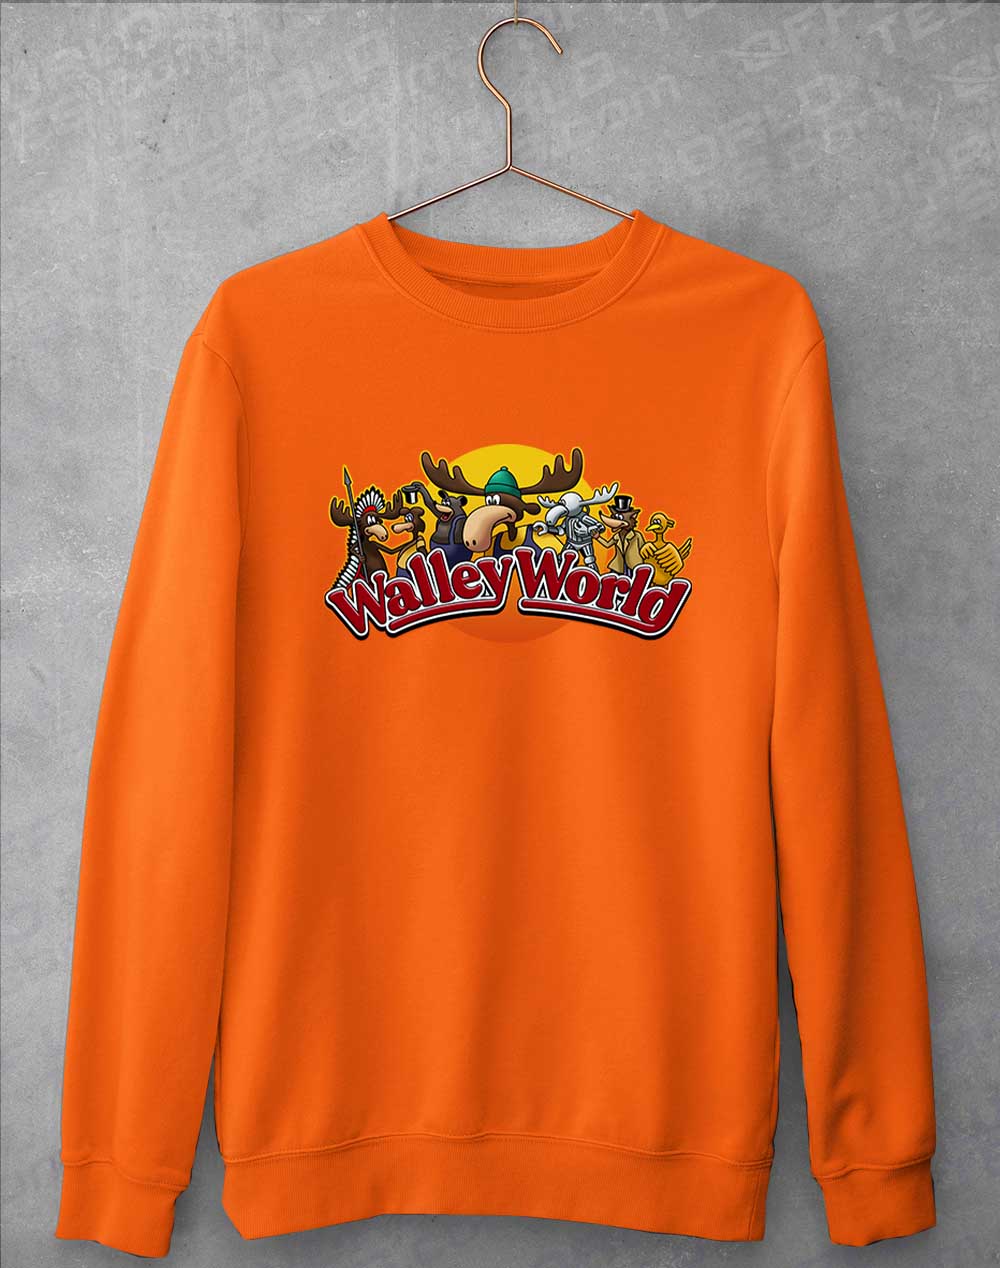 Orange Crush - Walley World Sweatshirt